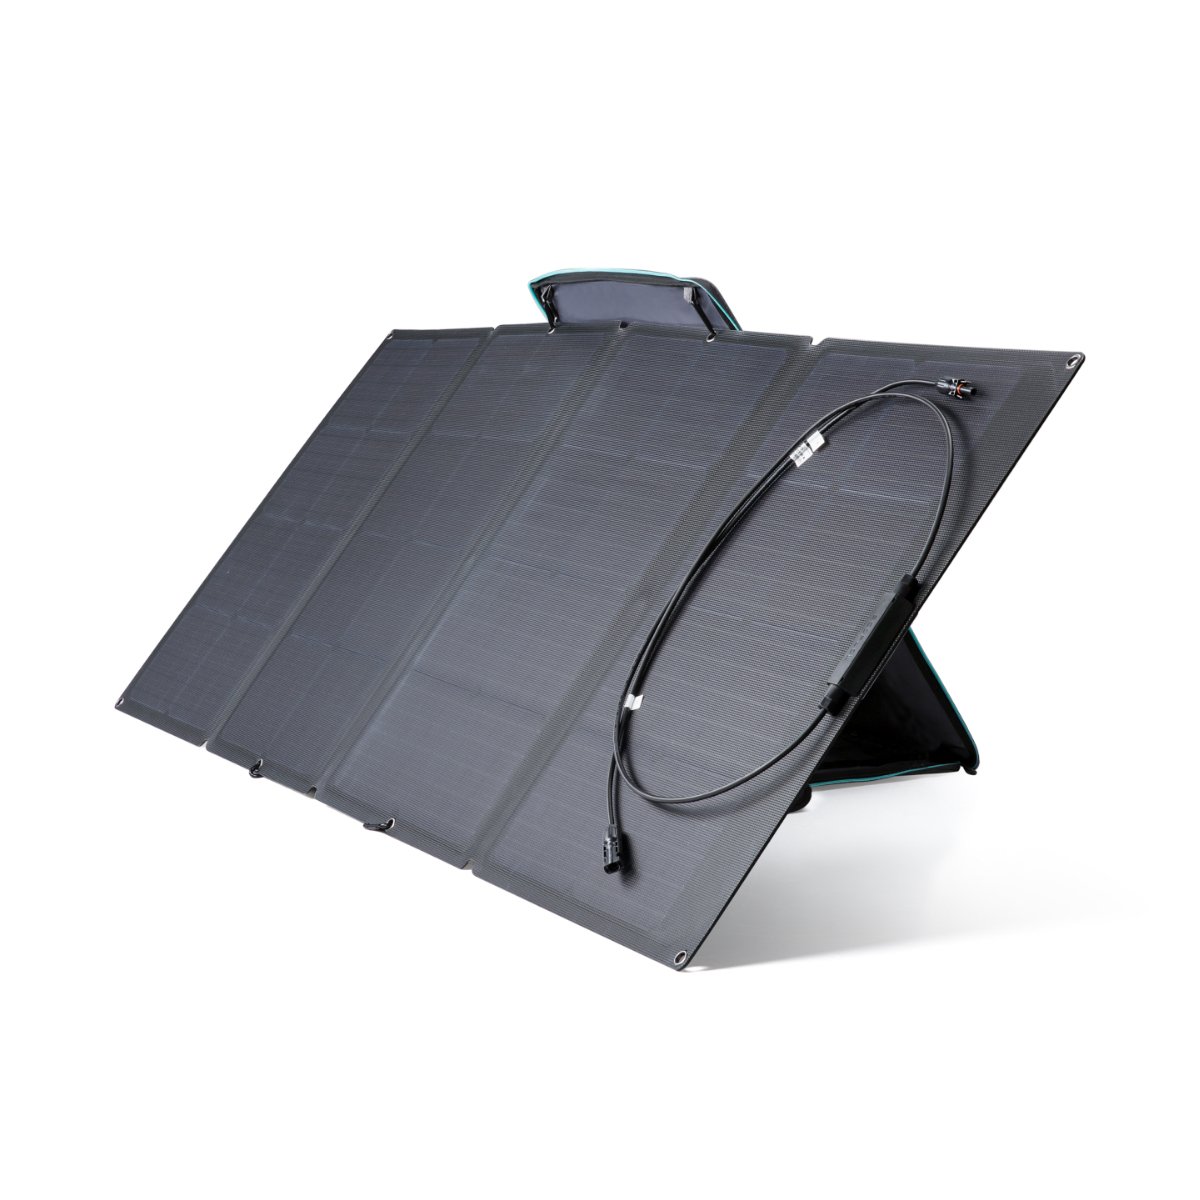 Ecoflow  Solarpanel 160W